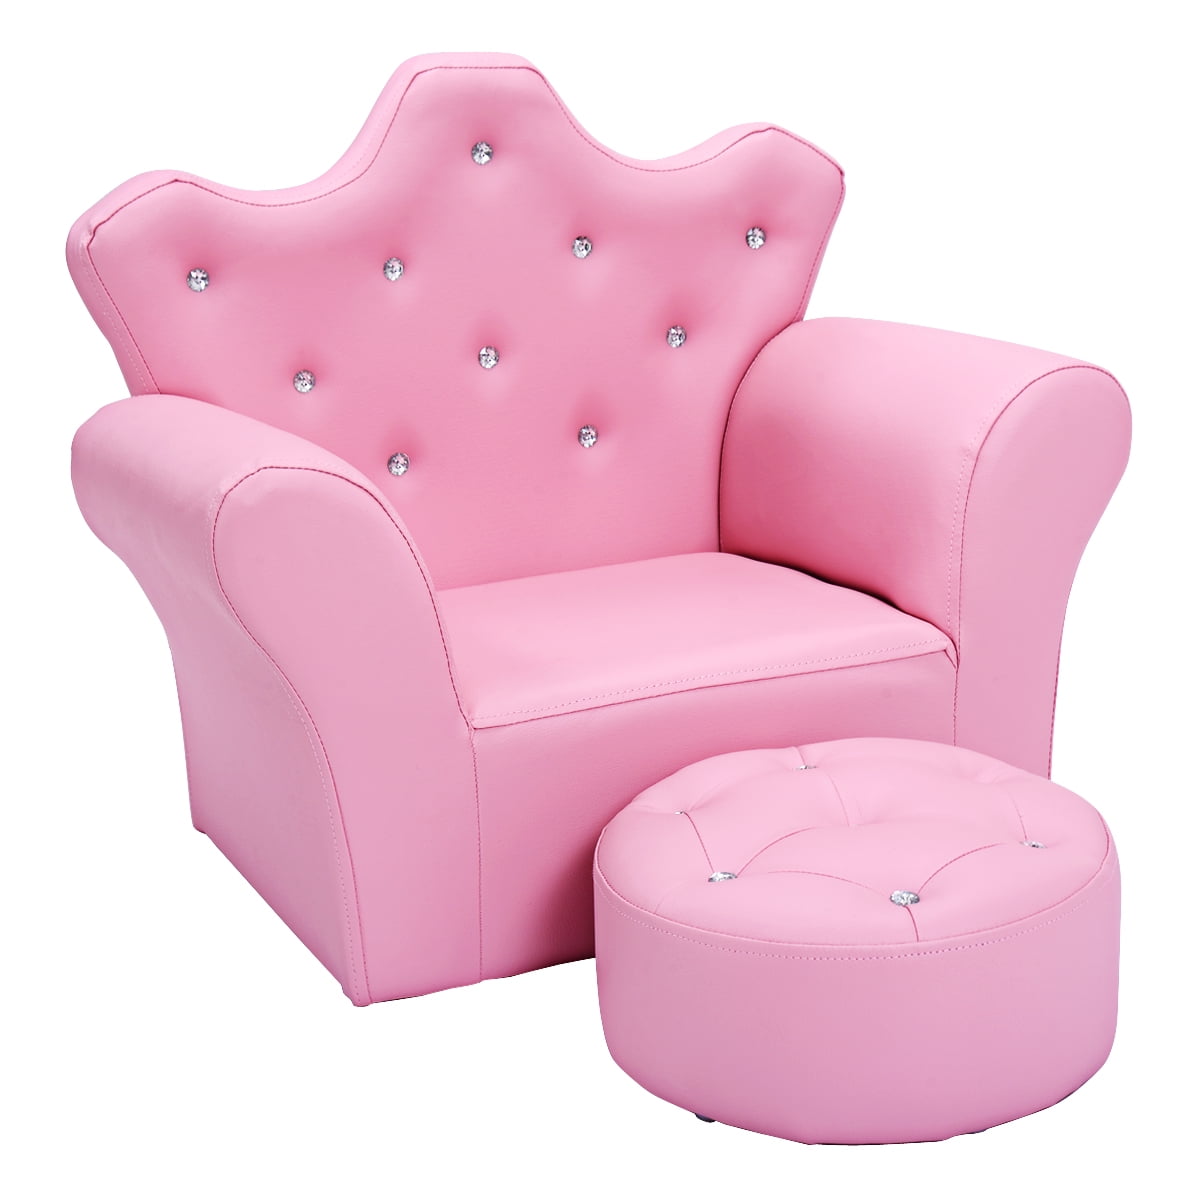 Toddler Children Leisure Single Sofa Armrest Chair Furniture Gift for Kids Pink 